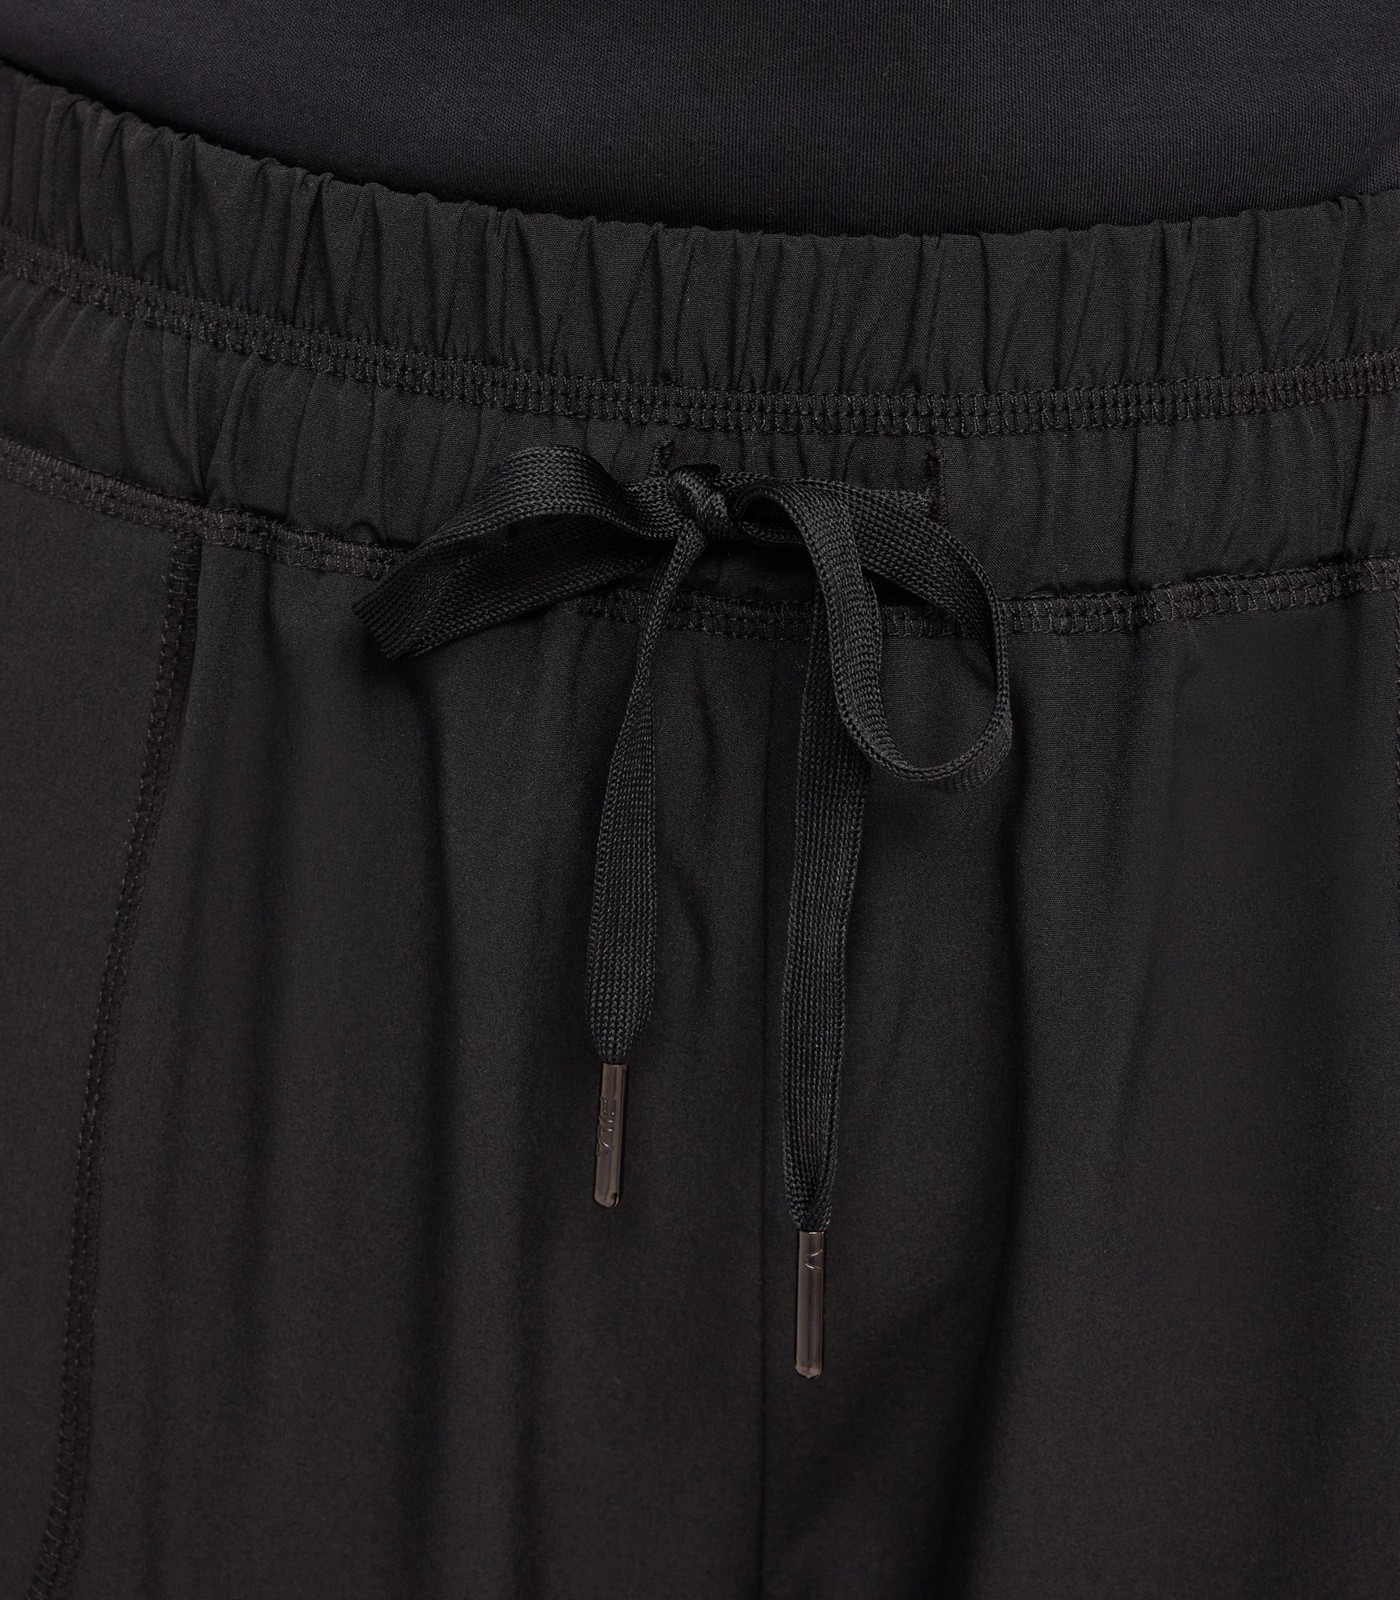 Fila Blaire 7/8 Length Pants - Black - Black